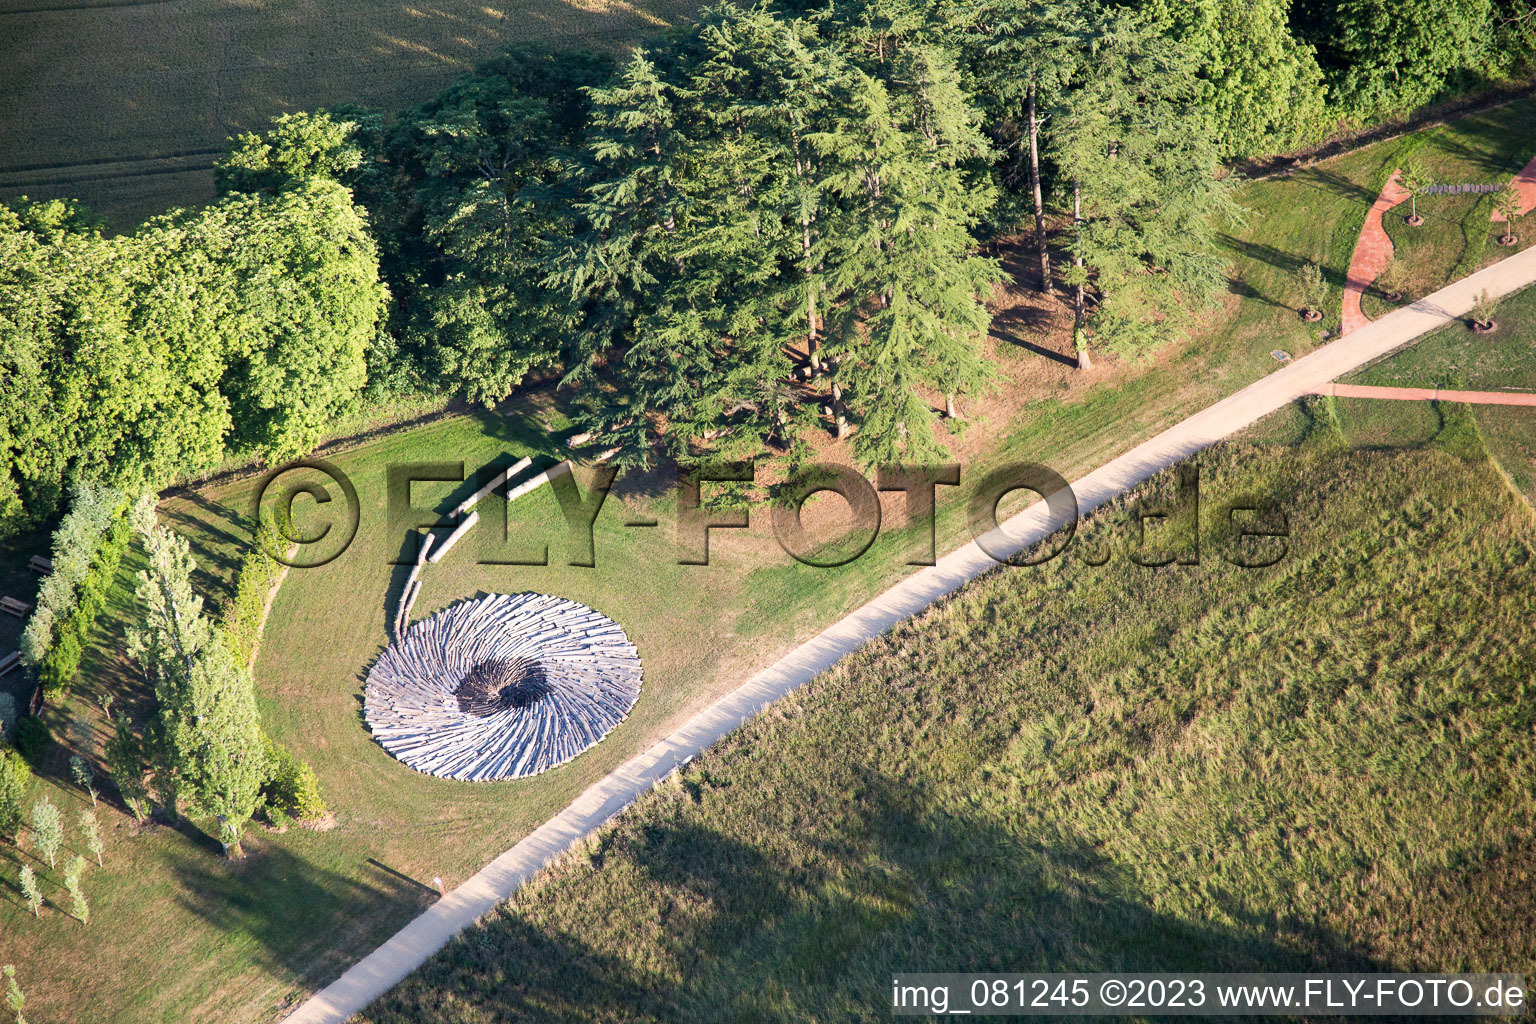 Drone image of Chaumont-sur-Loire in the state Loir et Cher, France